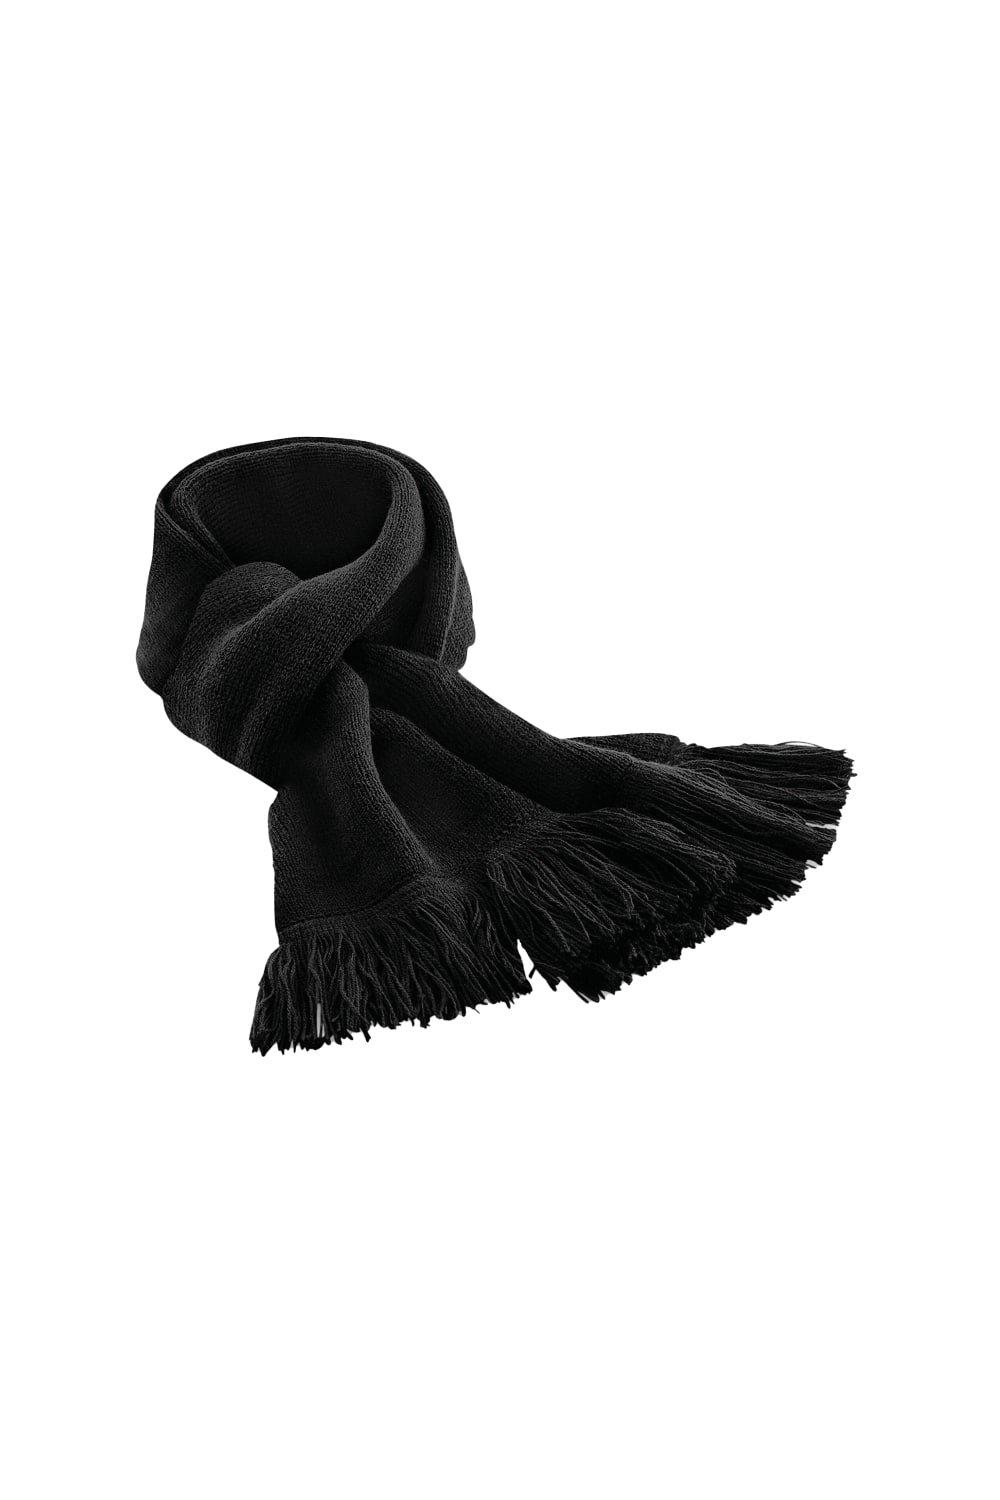 Классический вязаный зимний шарф Beechfield, черный